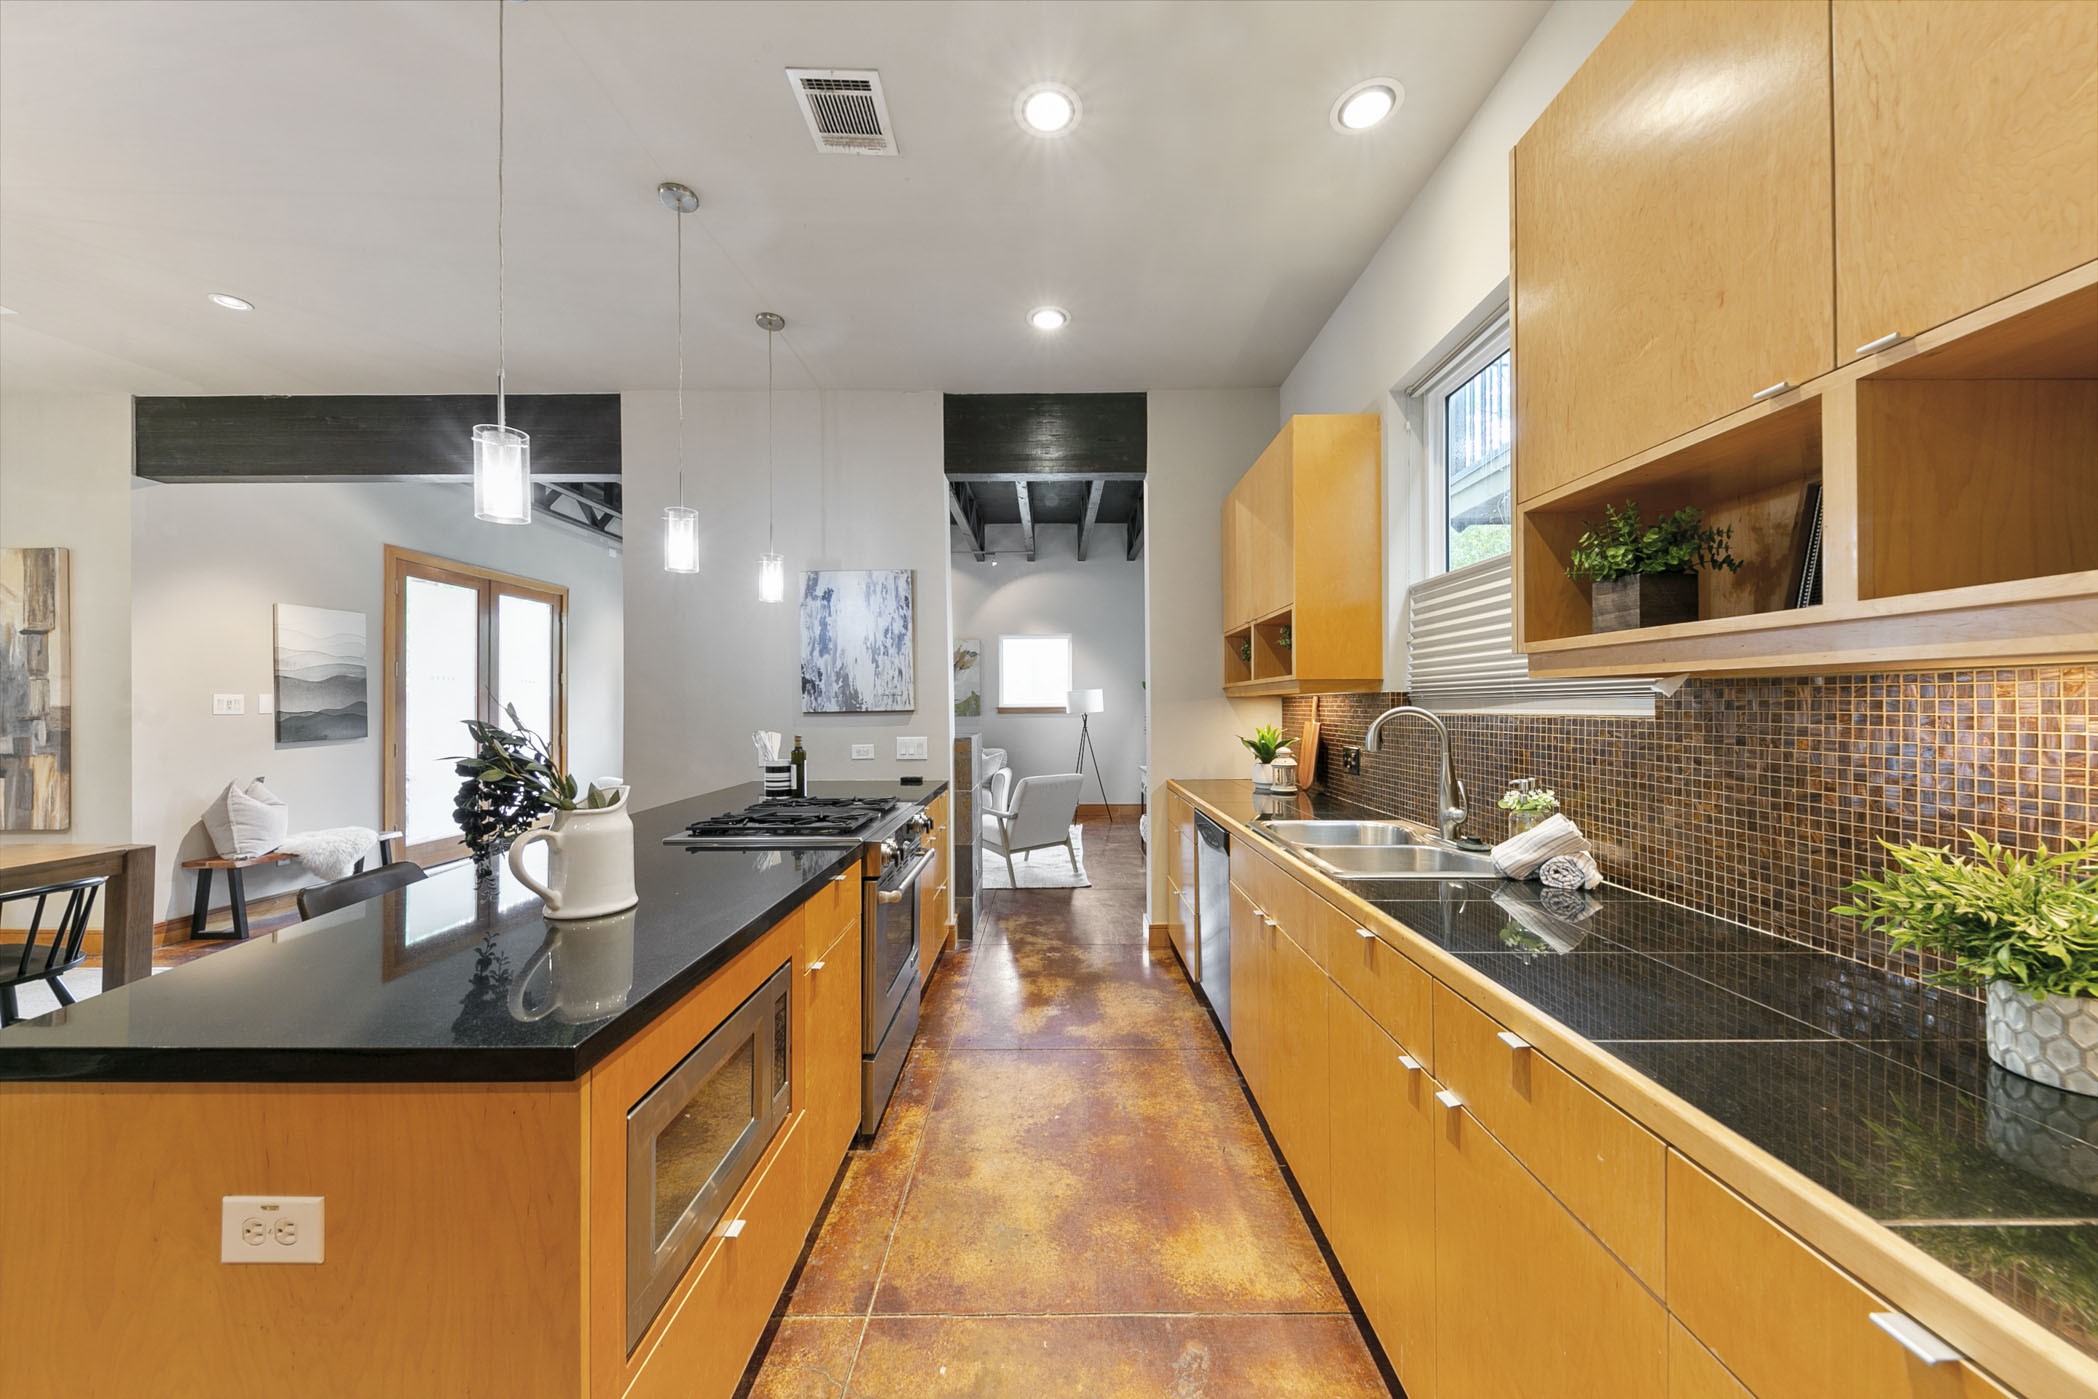 The kitchen features a custom mosaic backsplash!